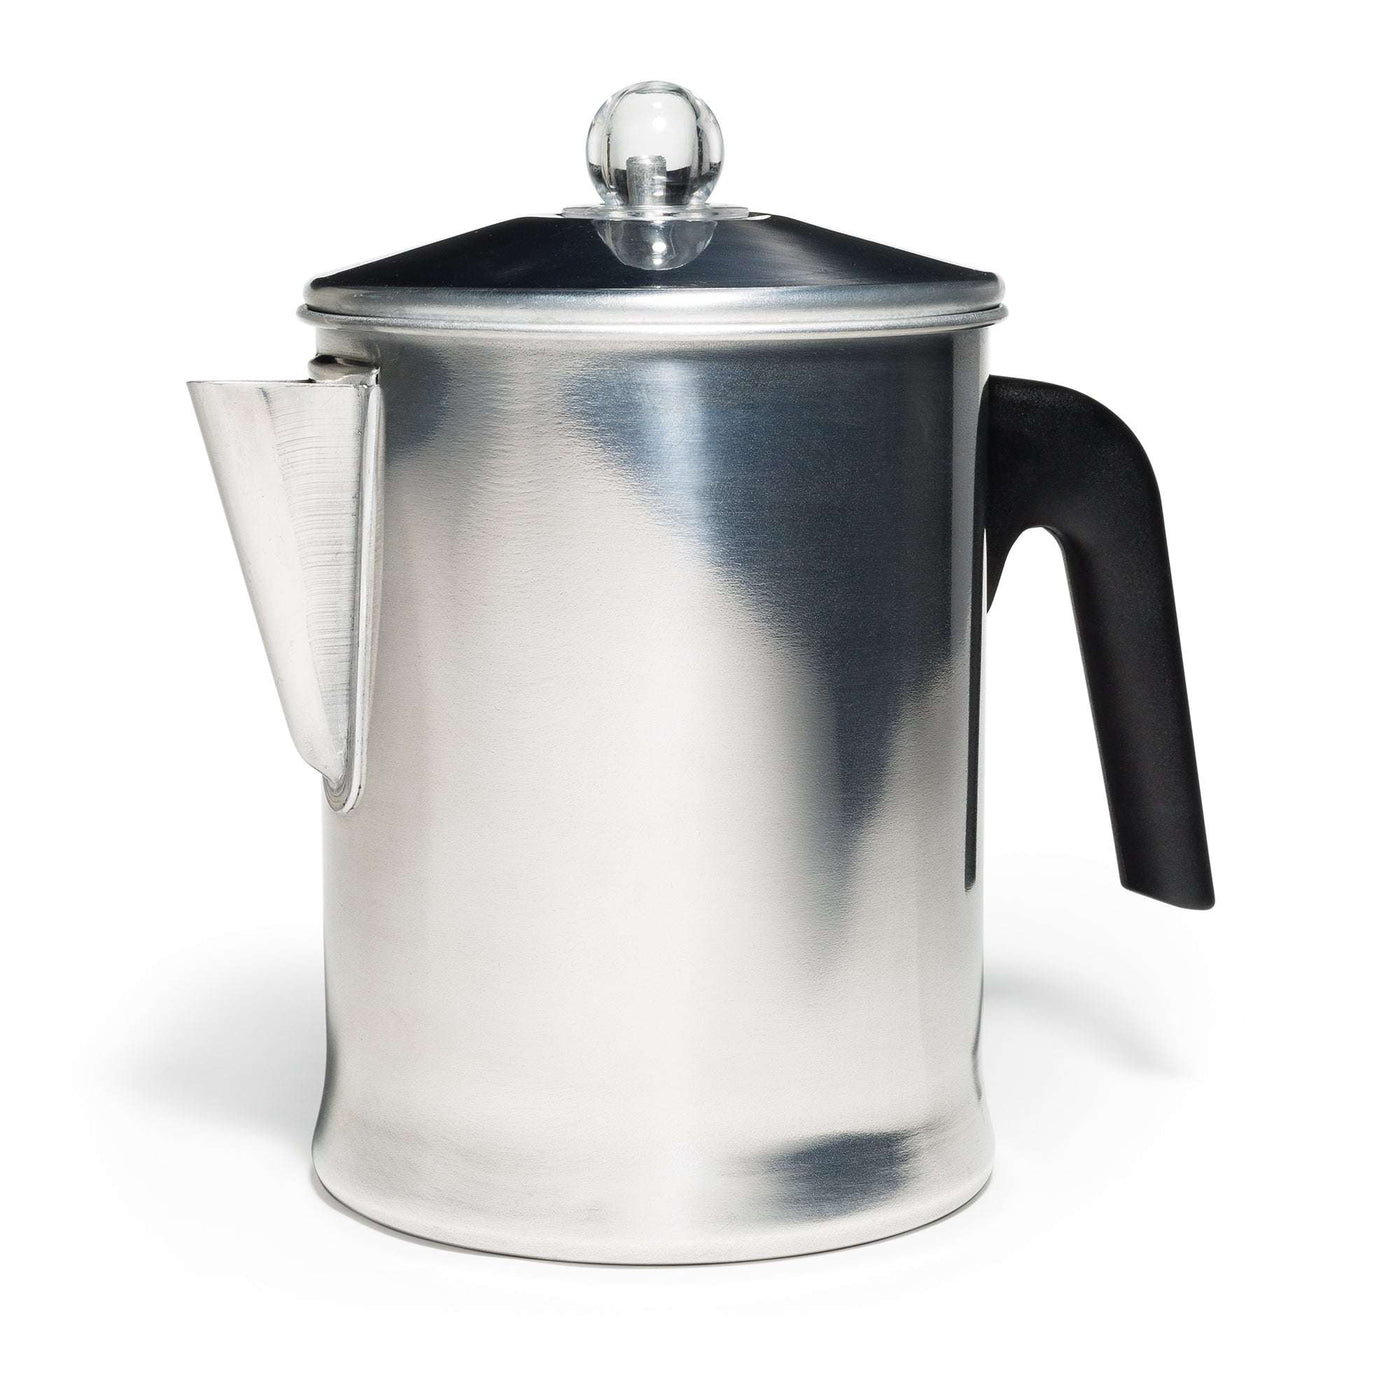 Mixpresso Aluminum Moka stove coffee maker, Moka Pot Coffee Maker for Gas,  Electric Stove Top, Classic Italian Coffee Maker, Espresso Maker Stovetop